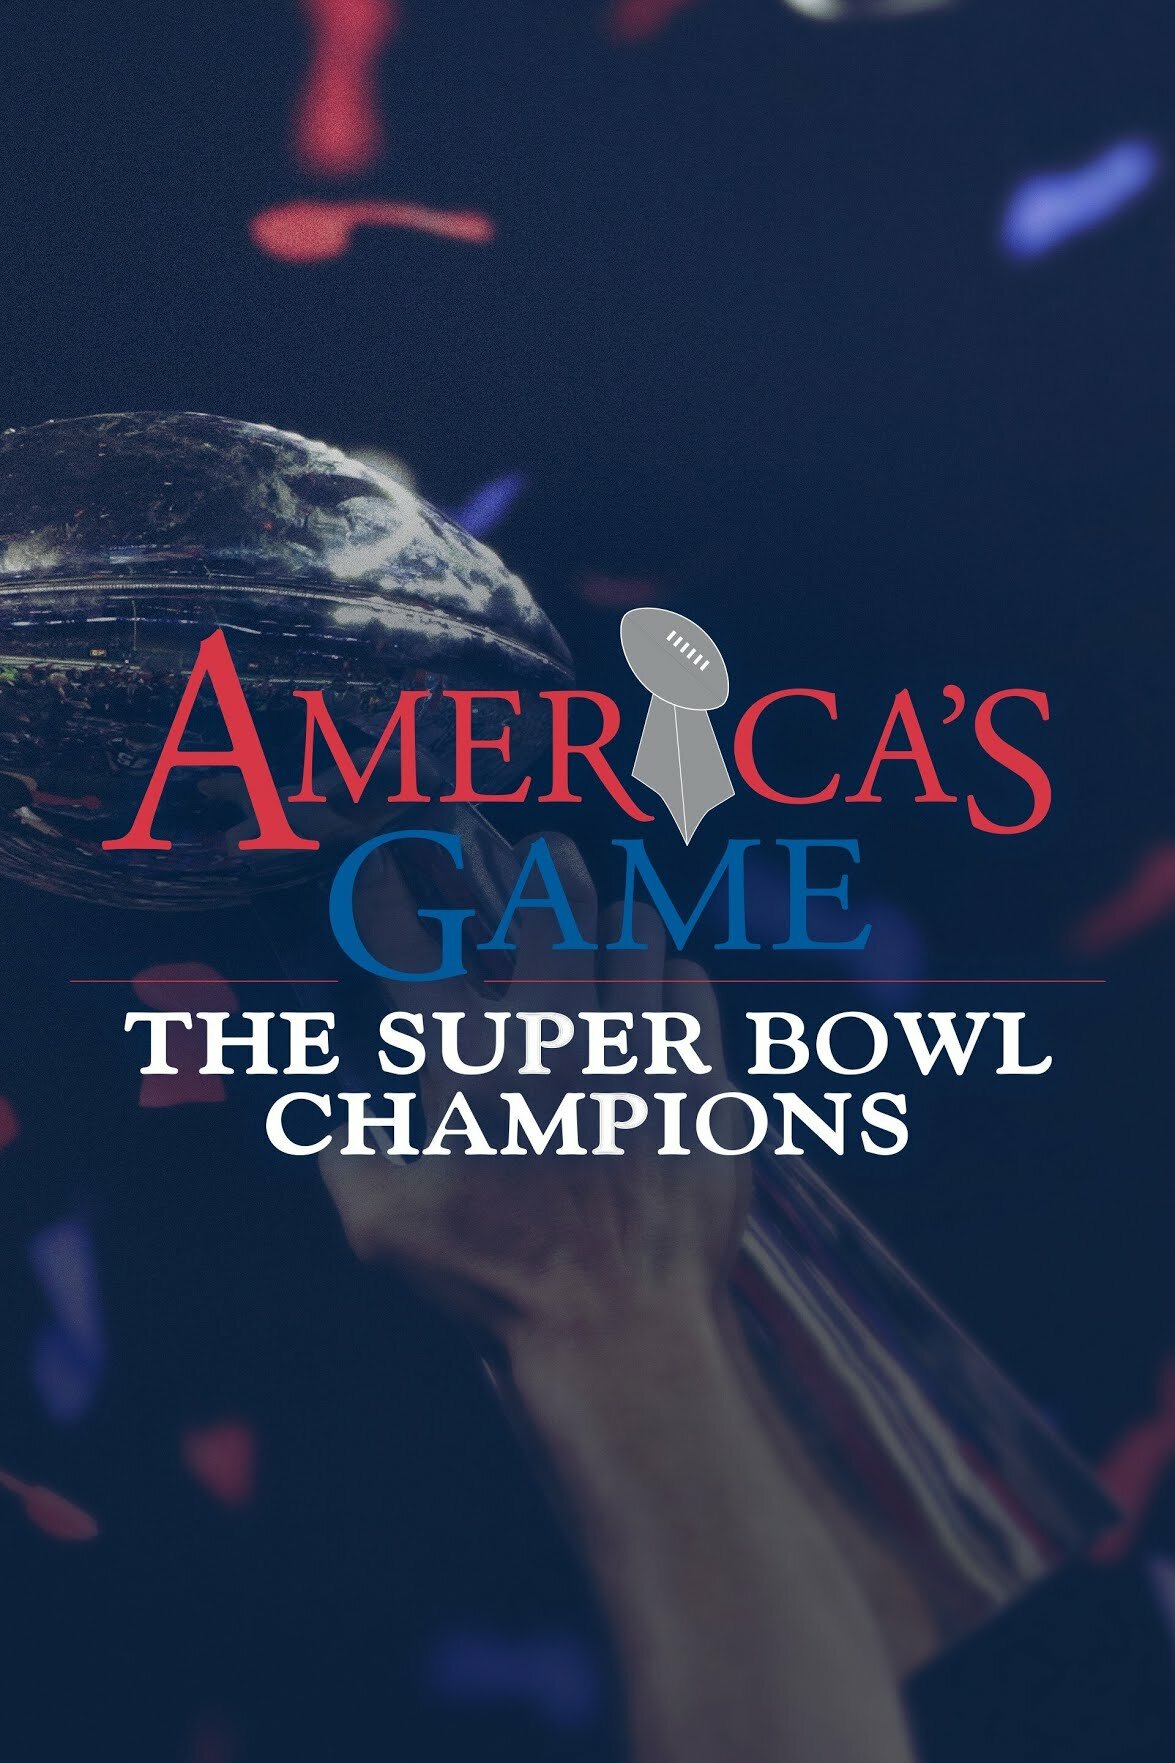 America's Game: The Superbowl Champions ne zaman